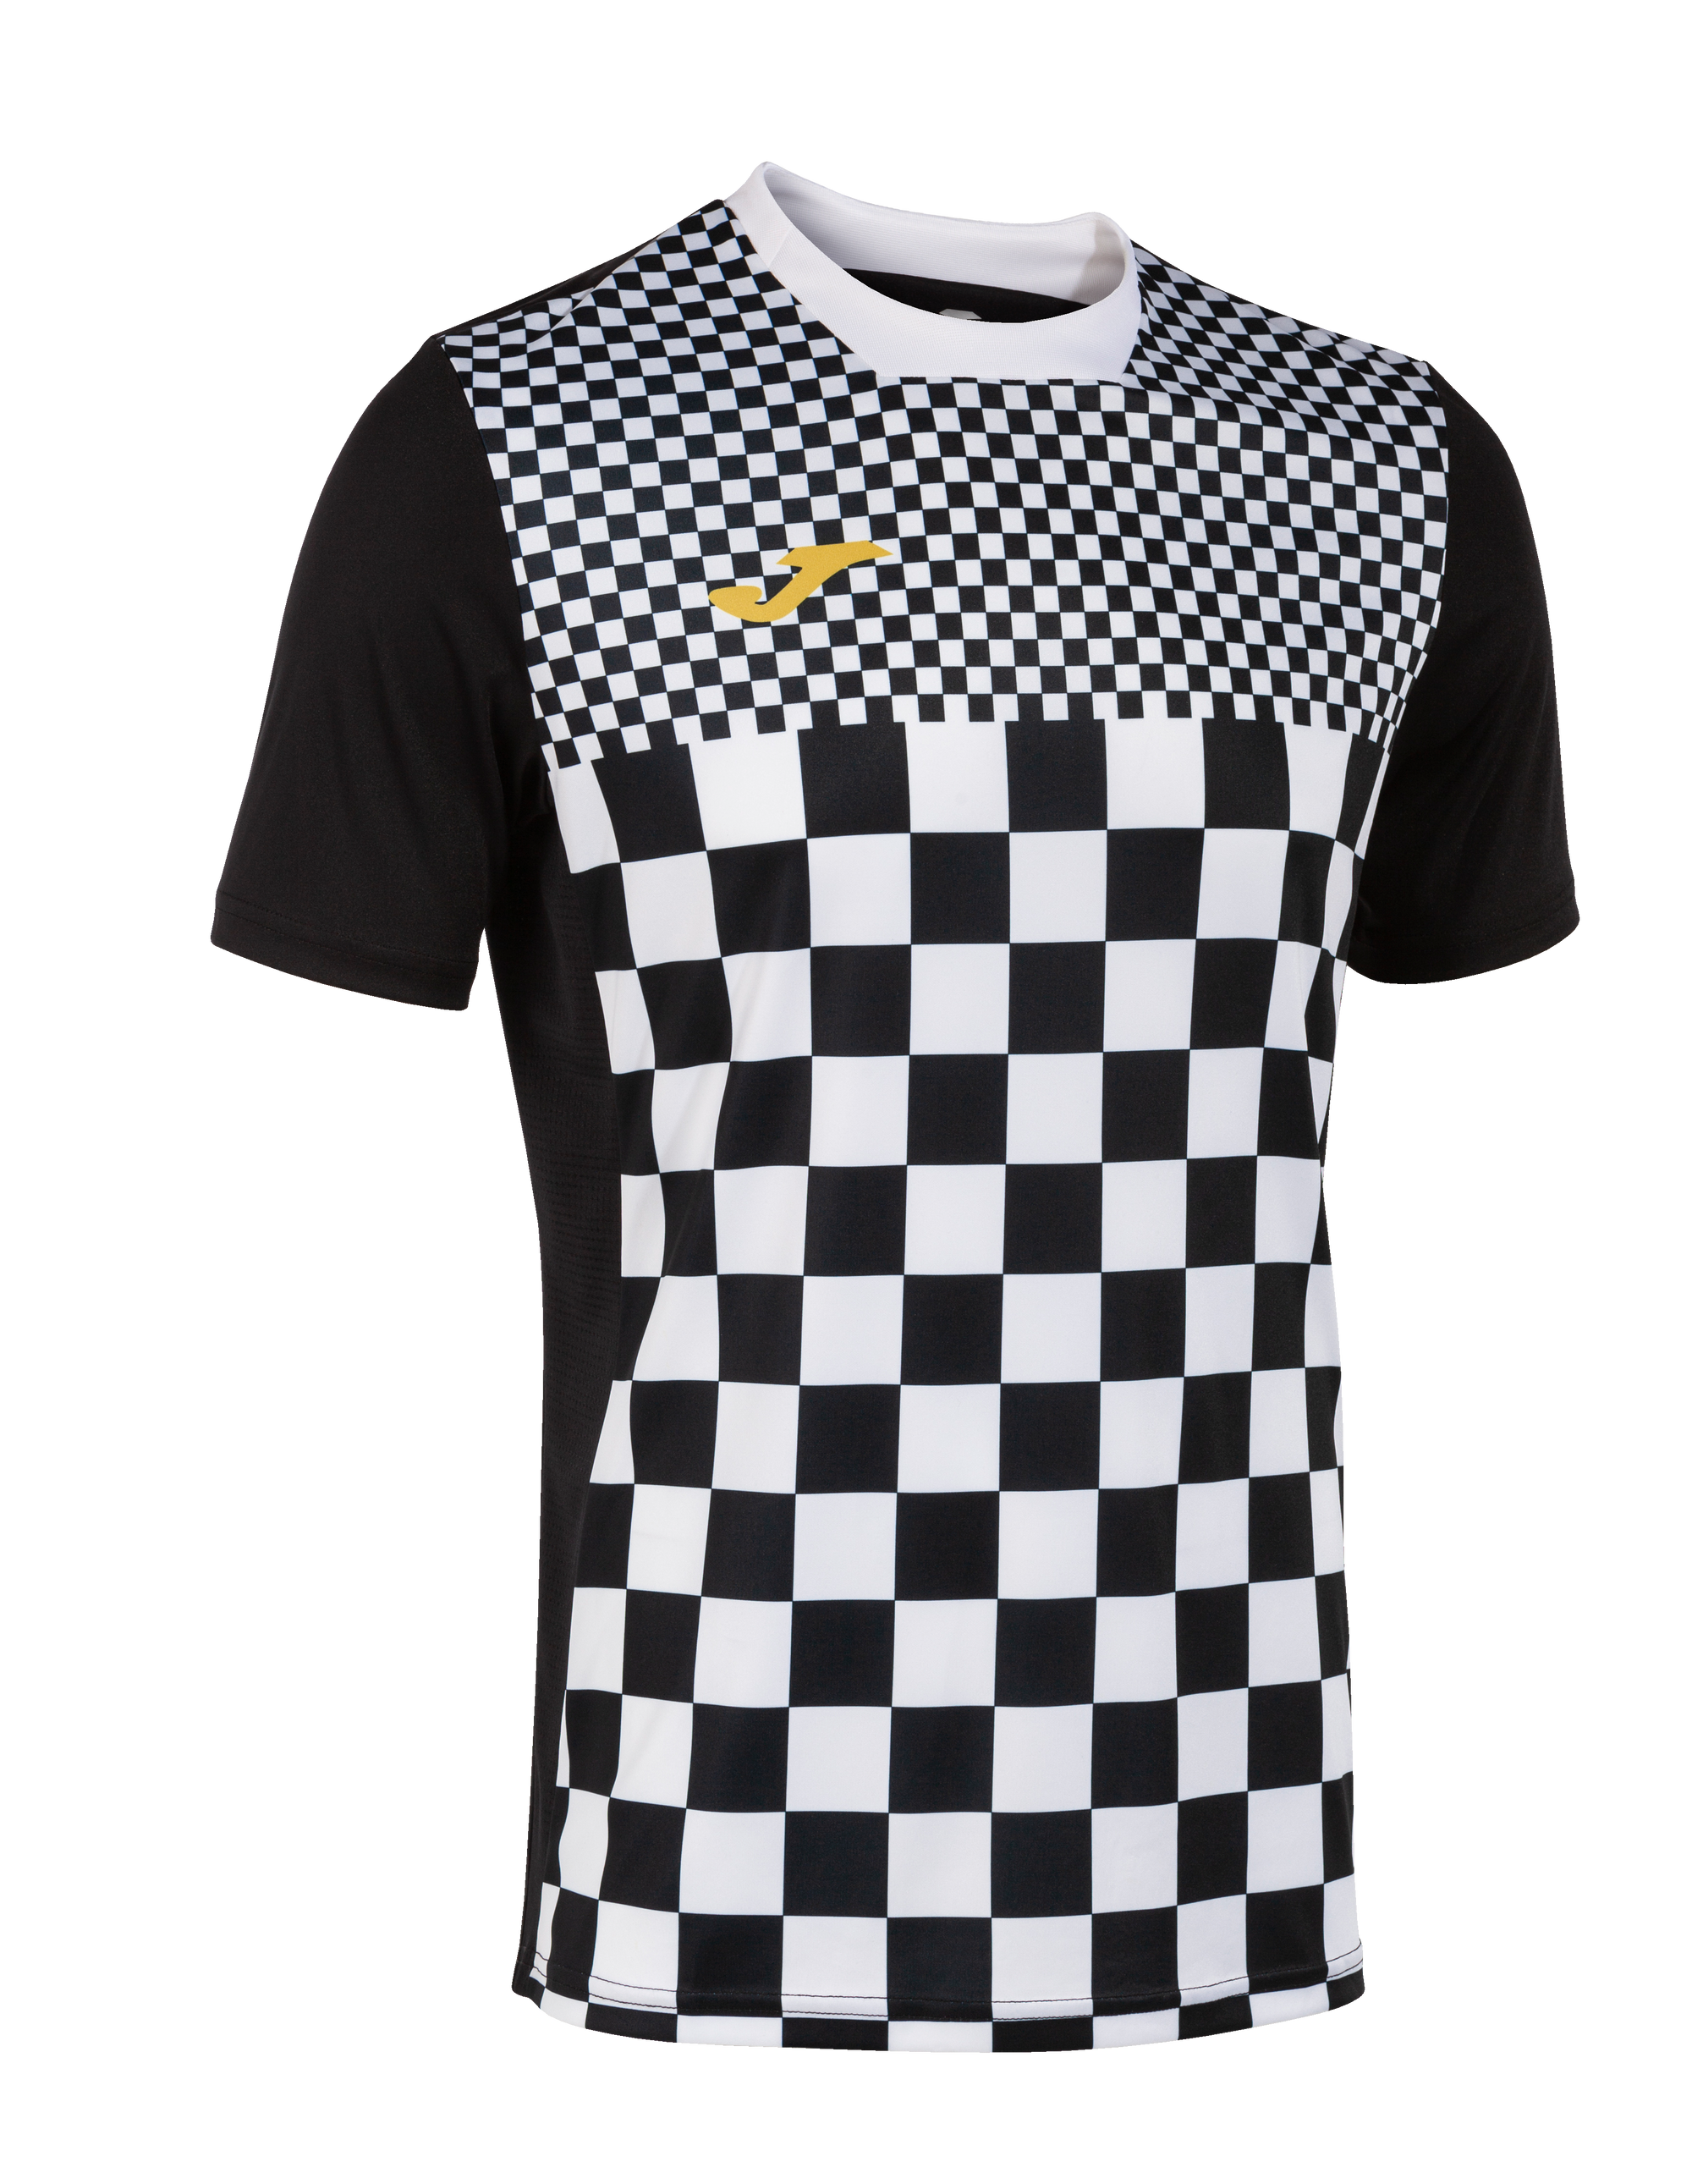 Joma Flag III Short Sleeve T-Shirt - Black/White